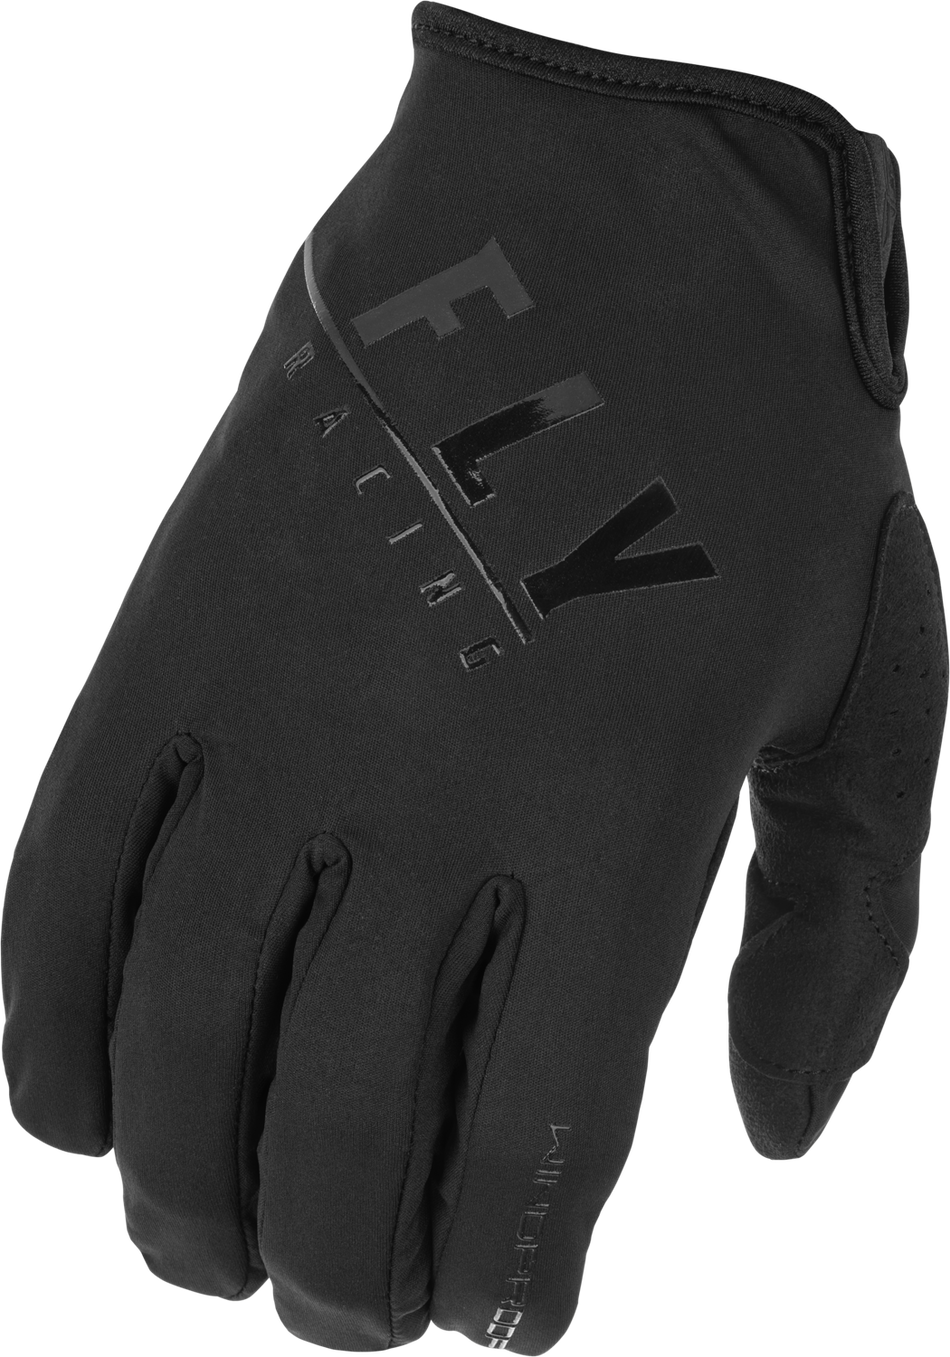 FLY RACING Windproof Gloves Black Sz 11 371-14111